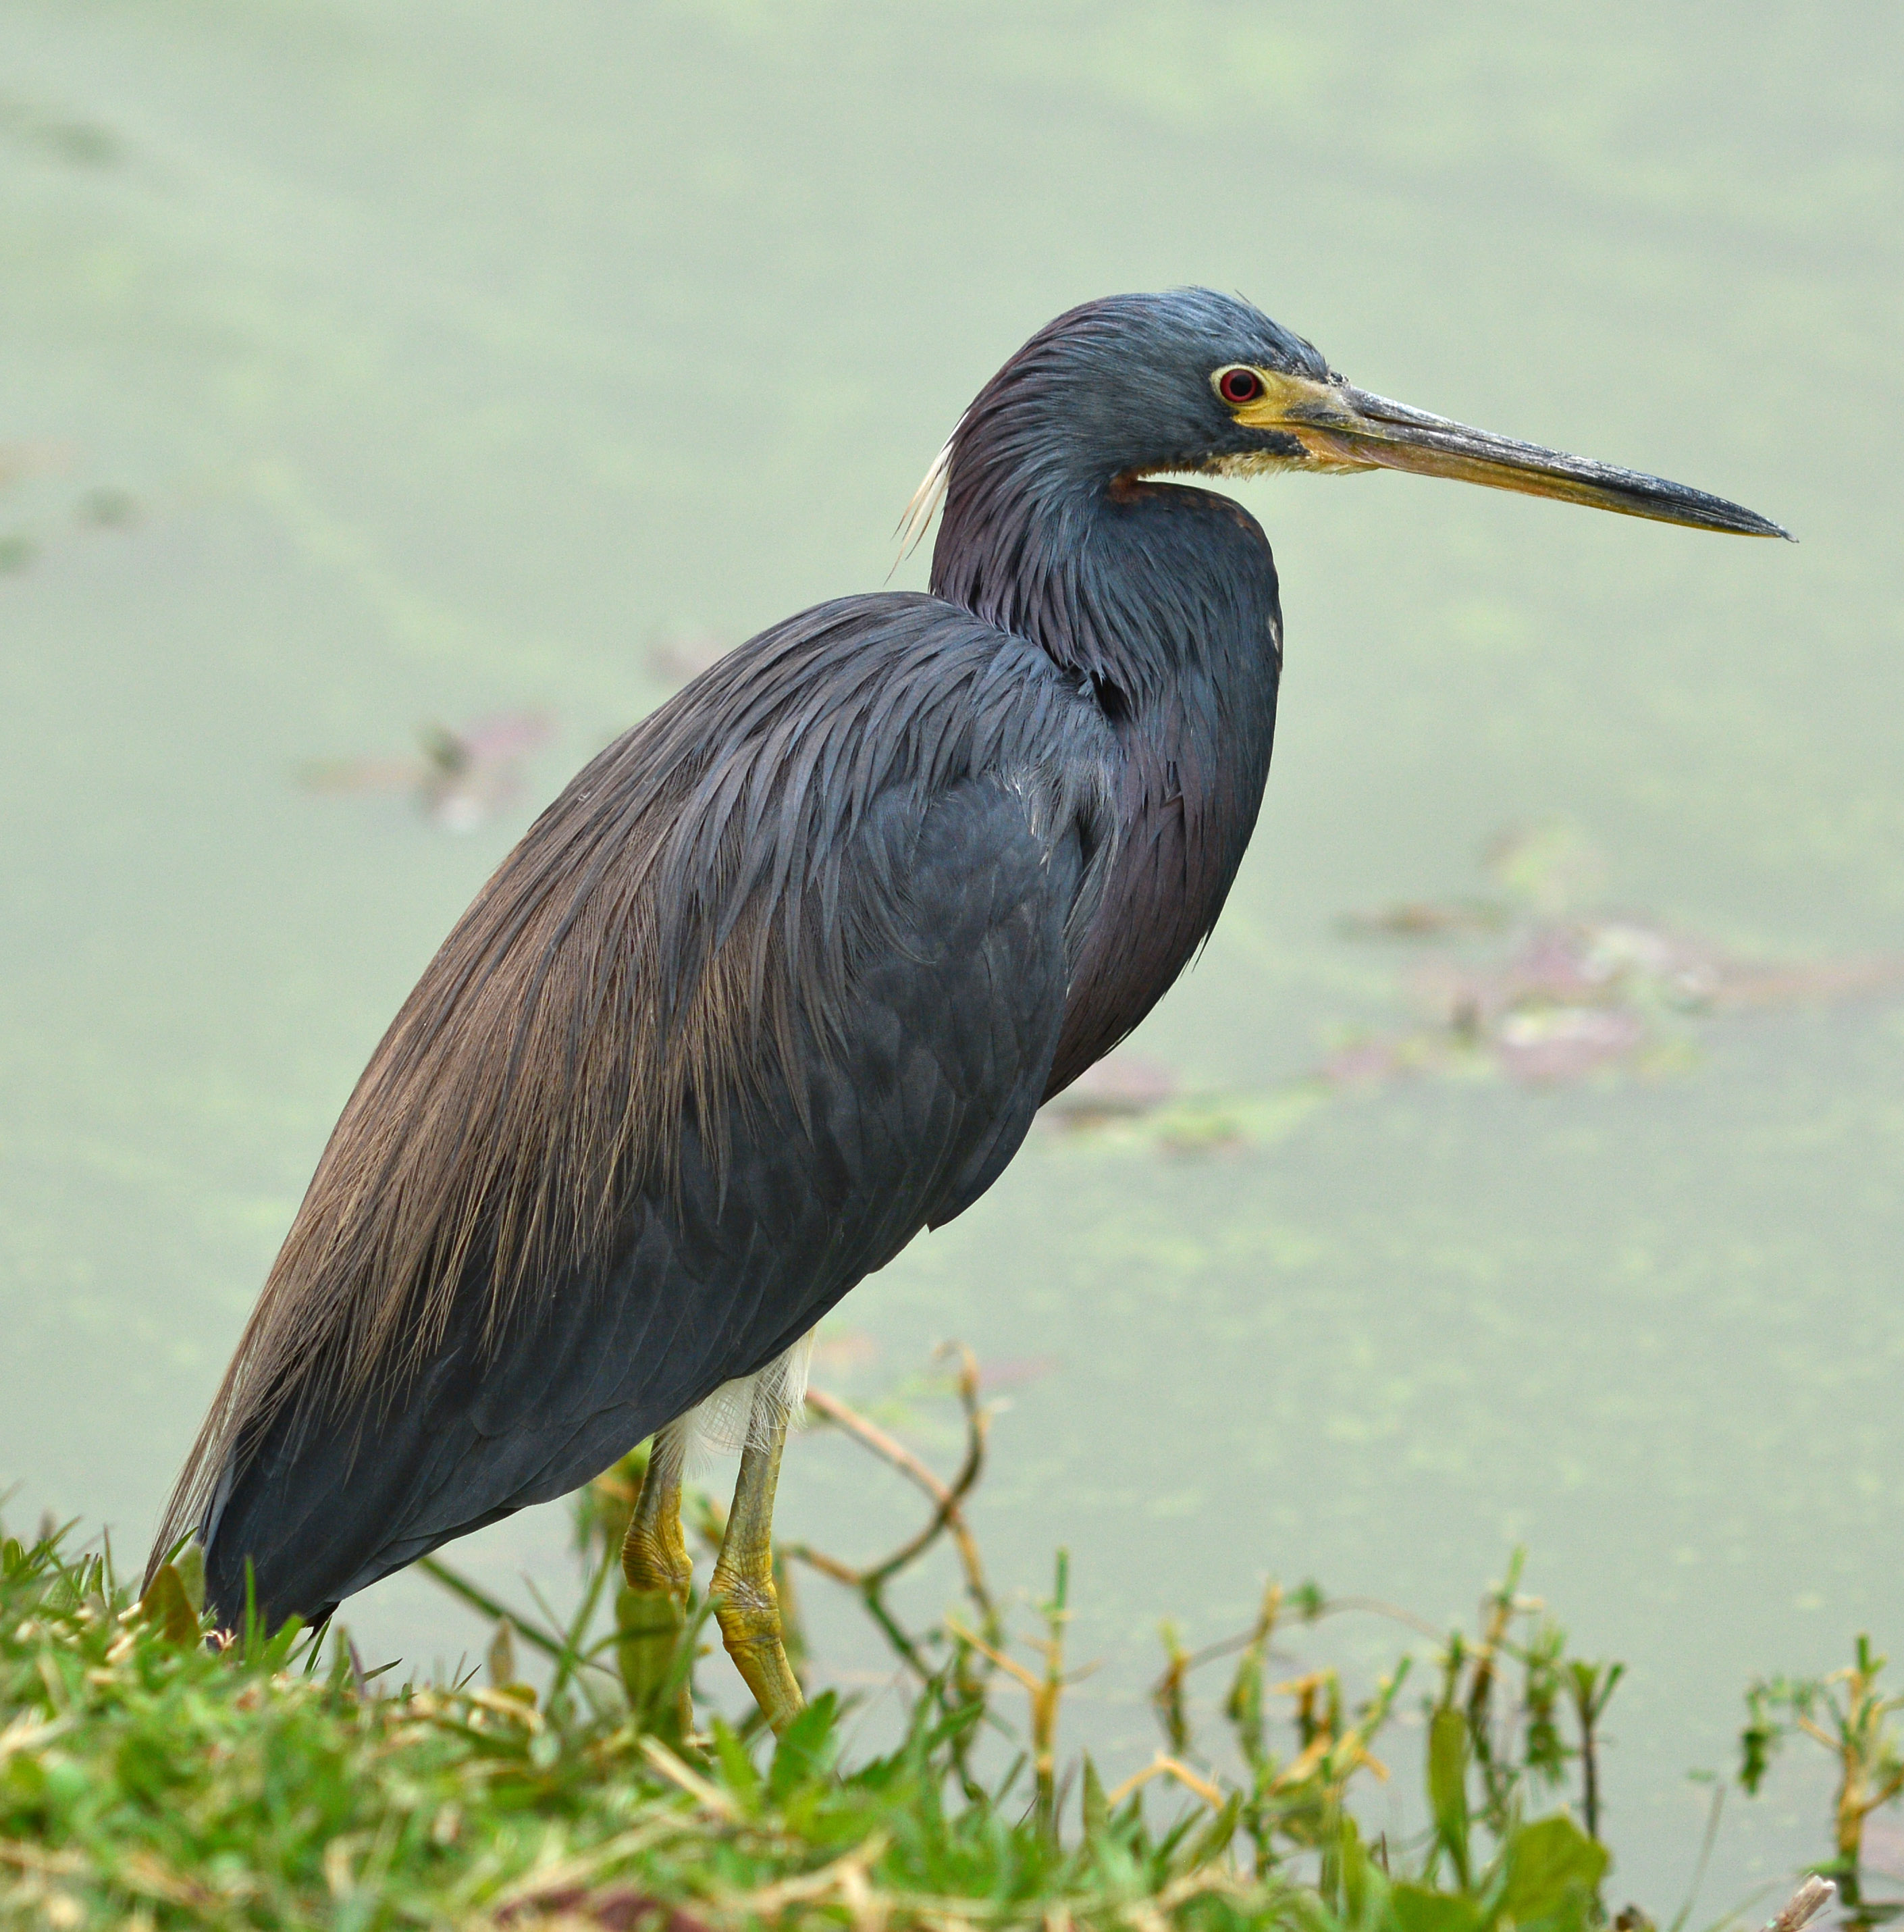 A greyish blue wading bird with long, sharp yellow beak on the edge of a wetland